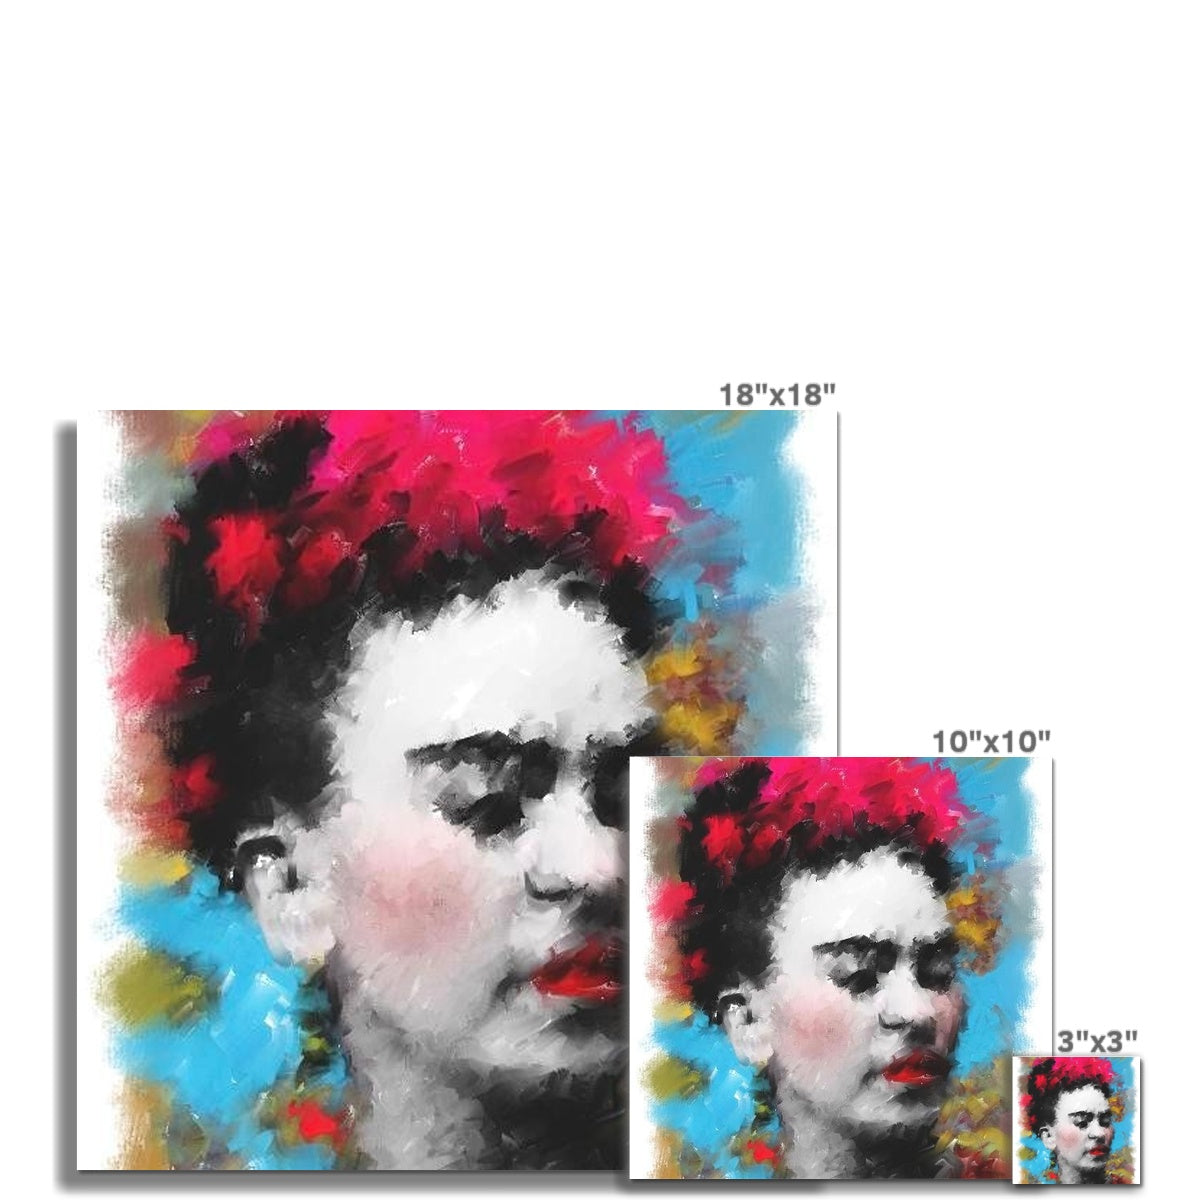 Frida Kahlo - Portrait C-Type Print